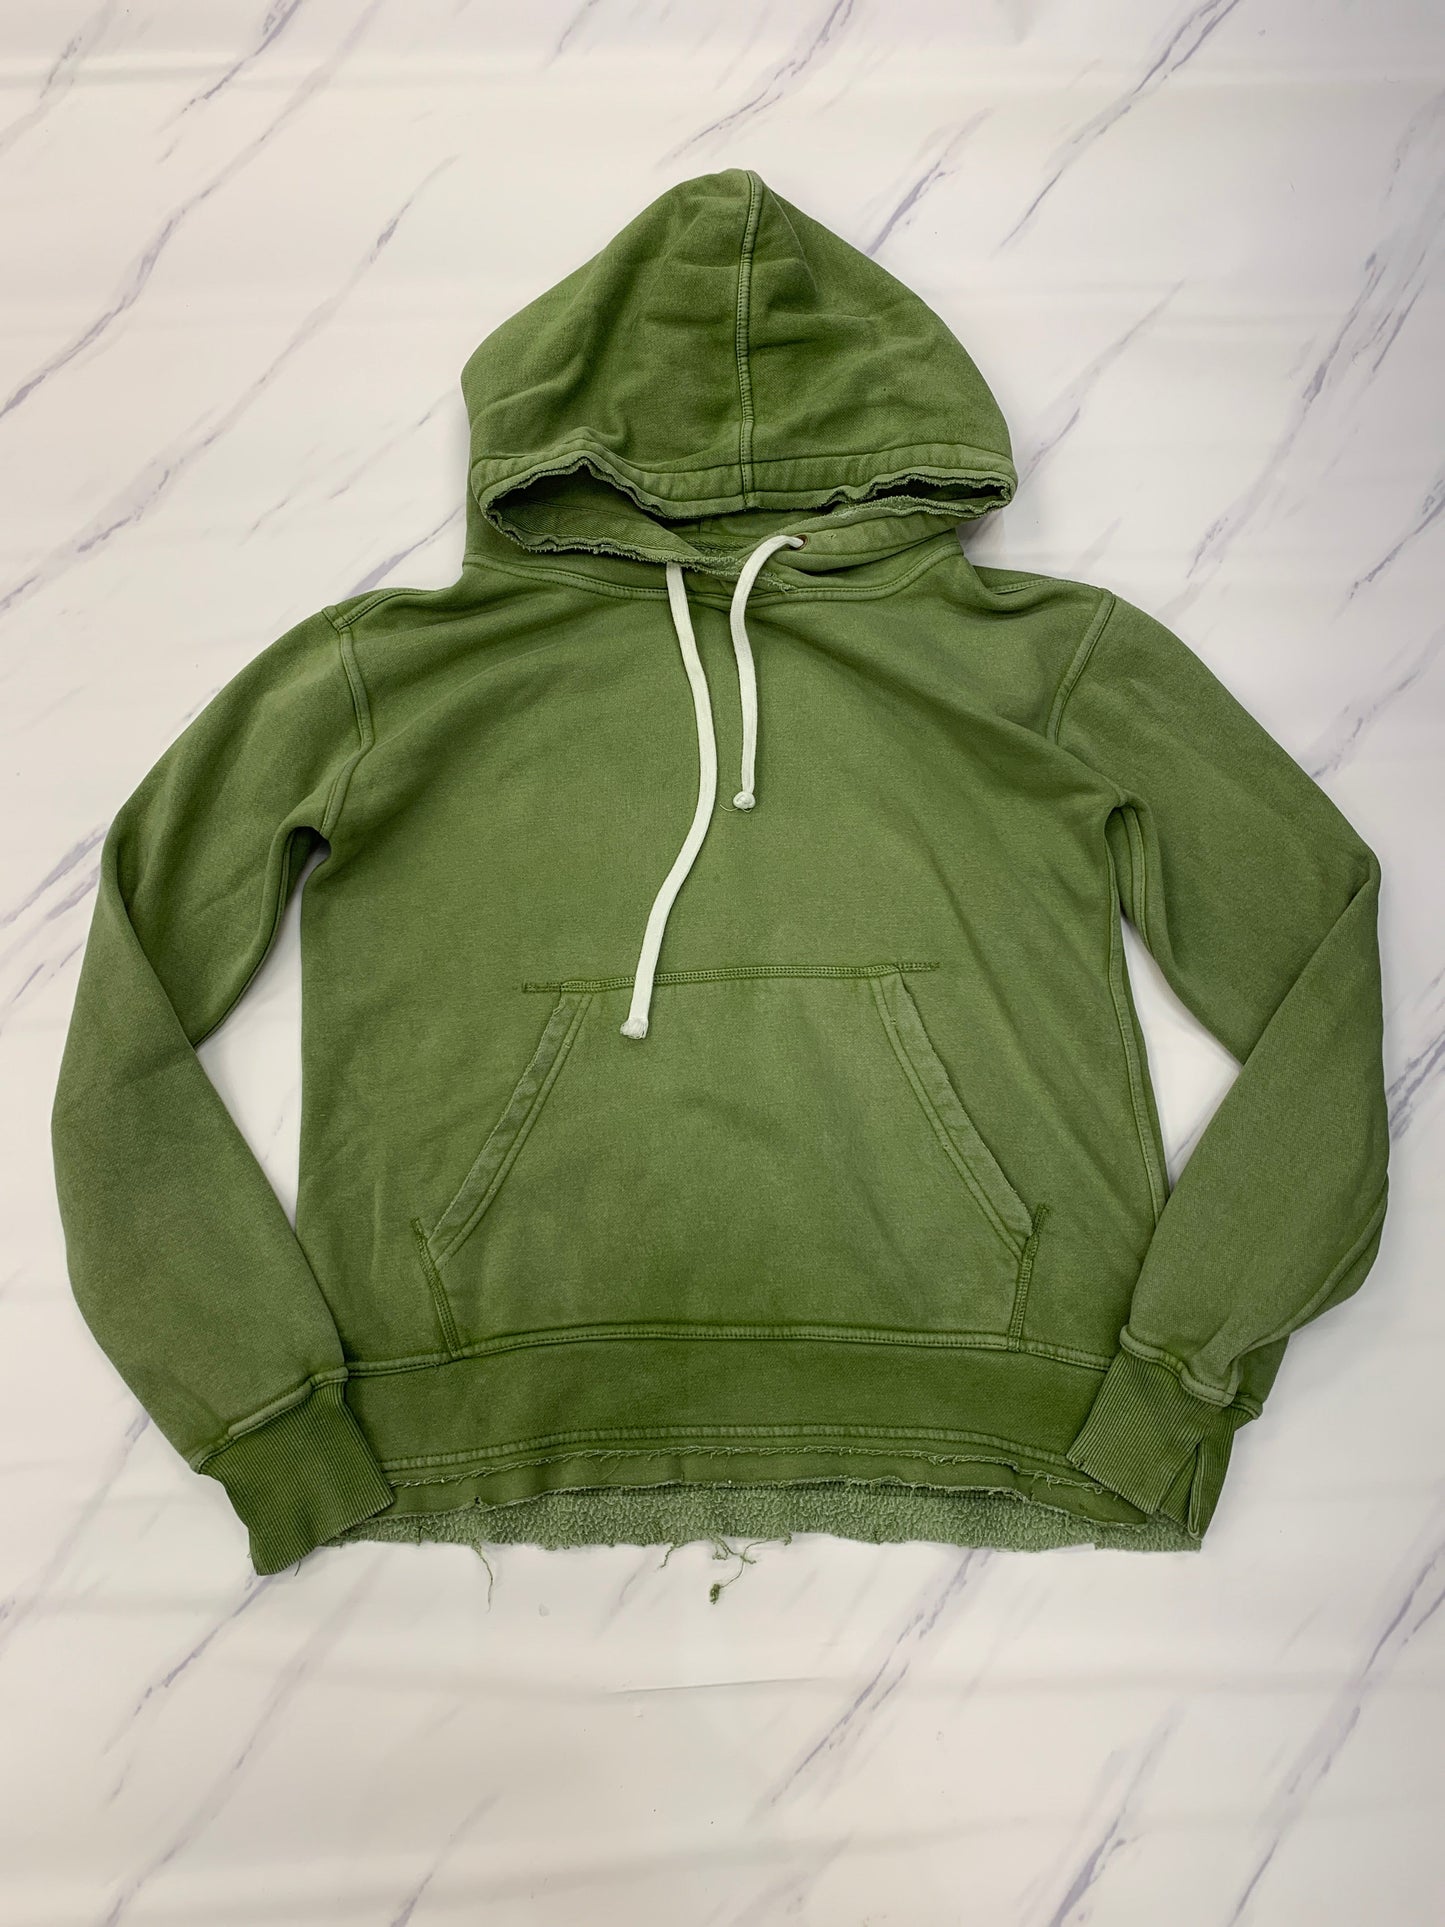 Green Sweatshirt Hoodie We The Free, Size Xs